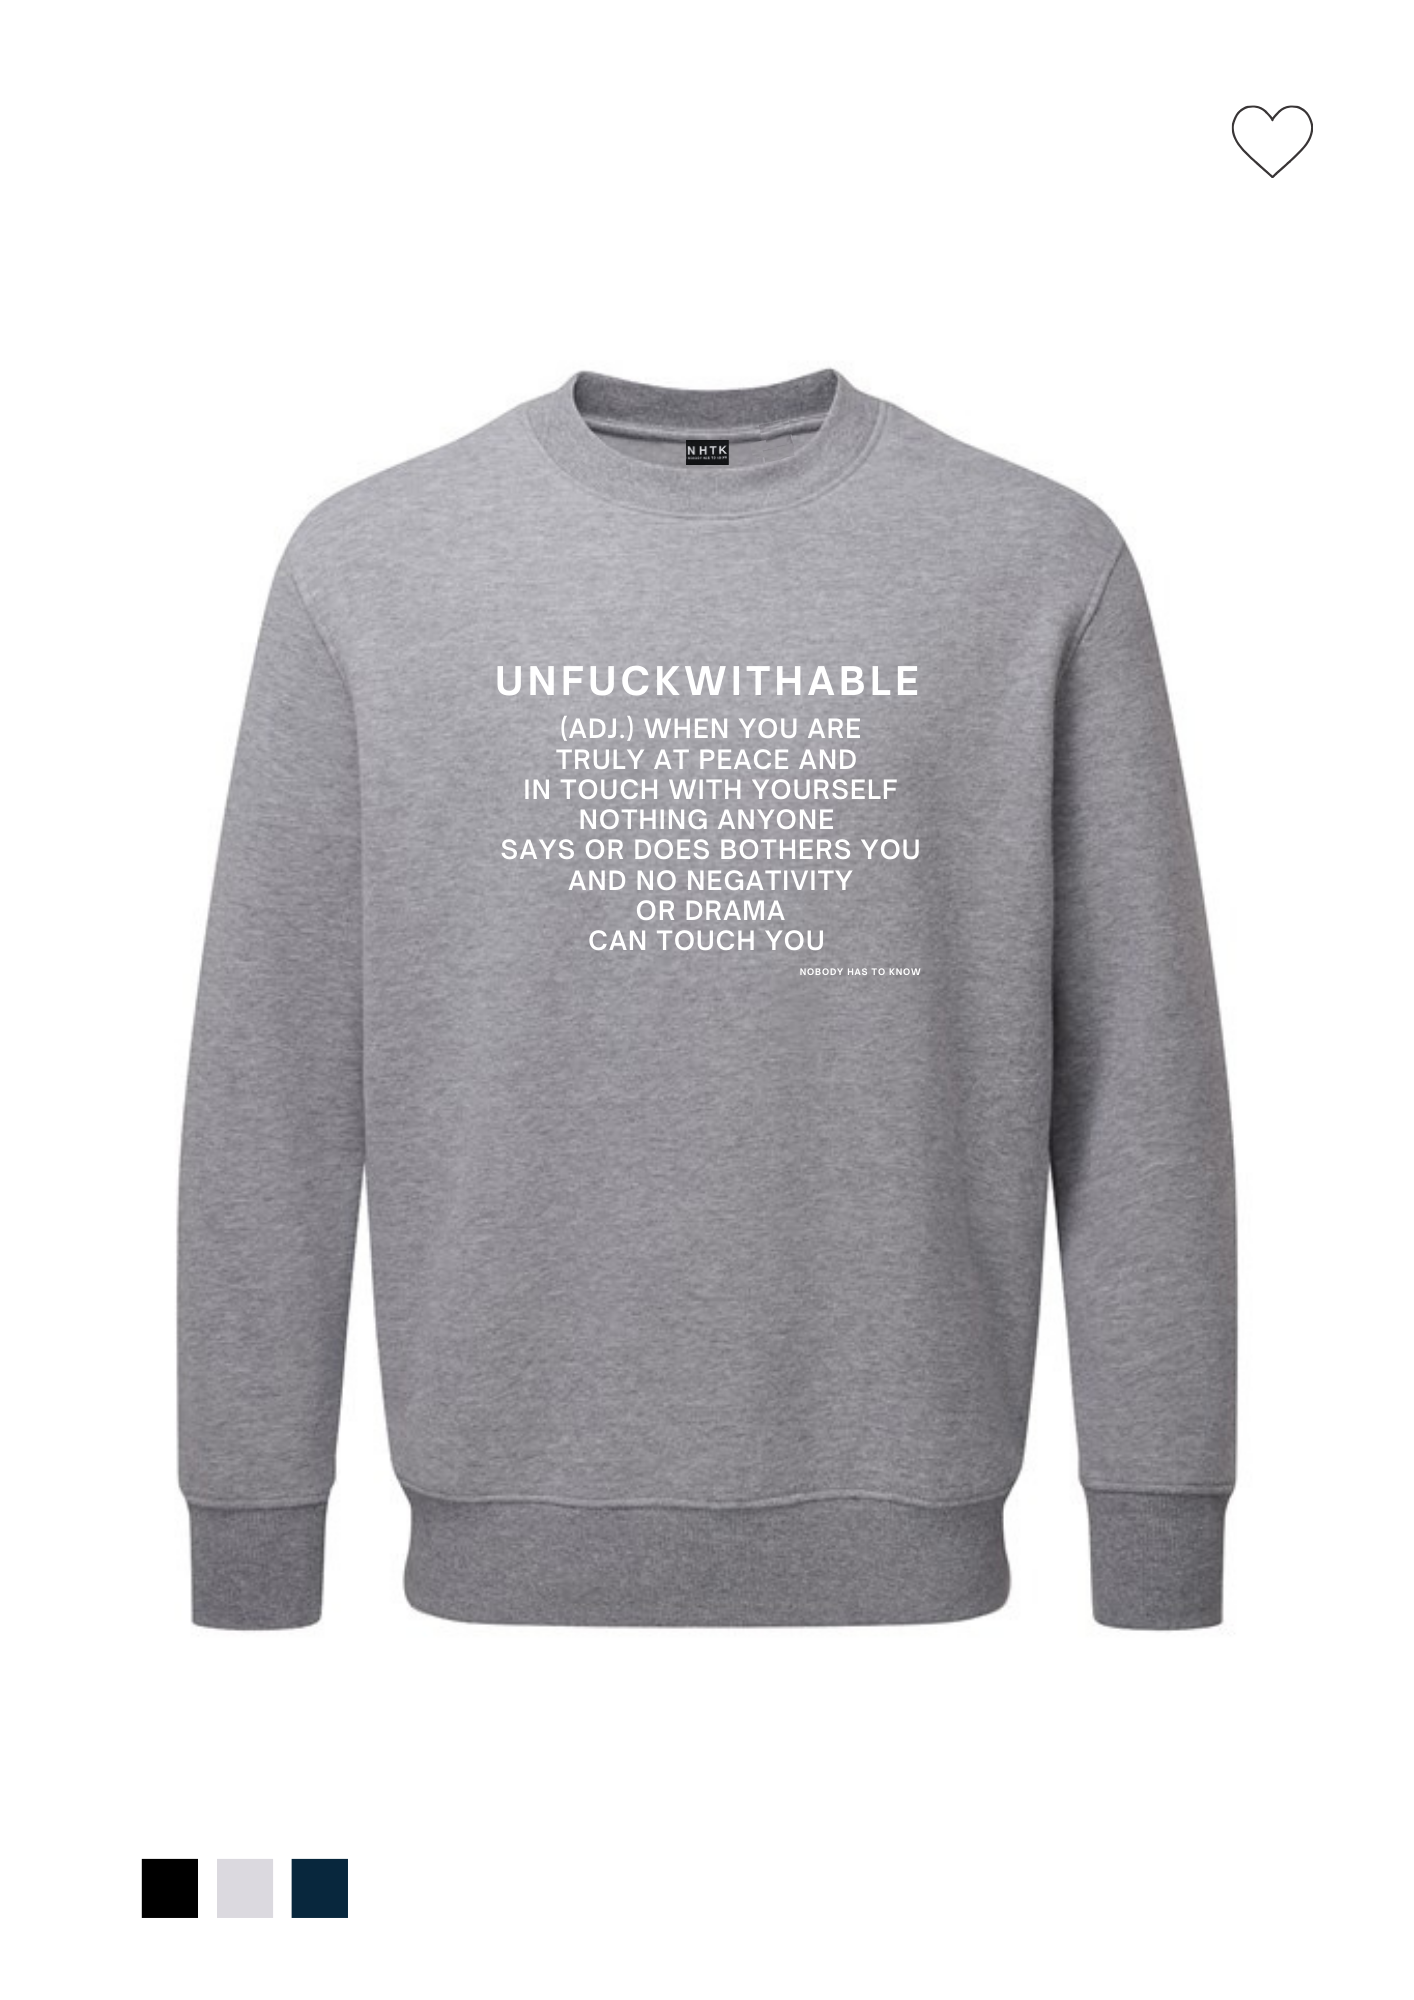 Unfuckwithable (E) - sweater